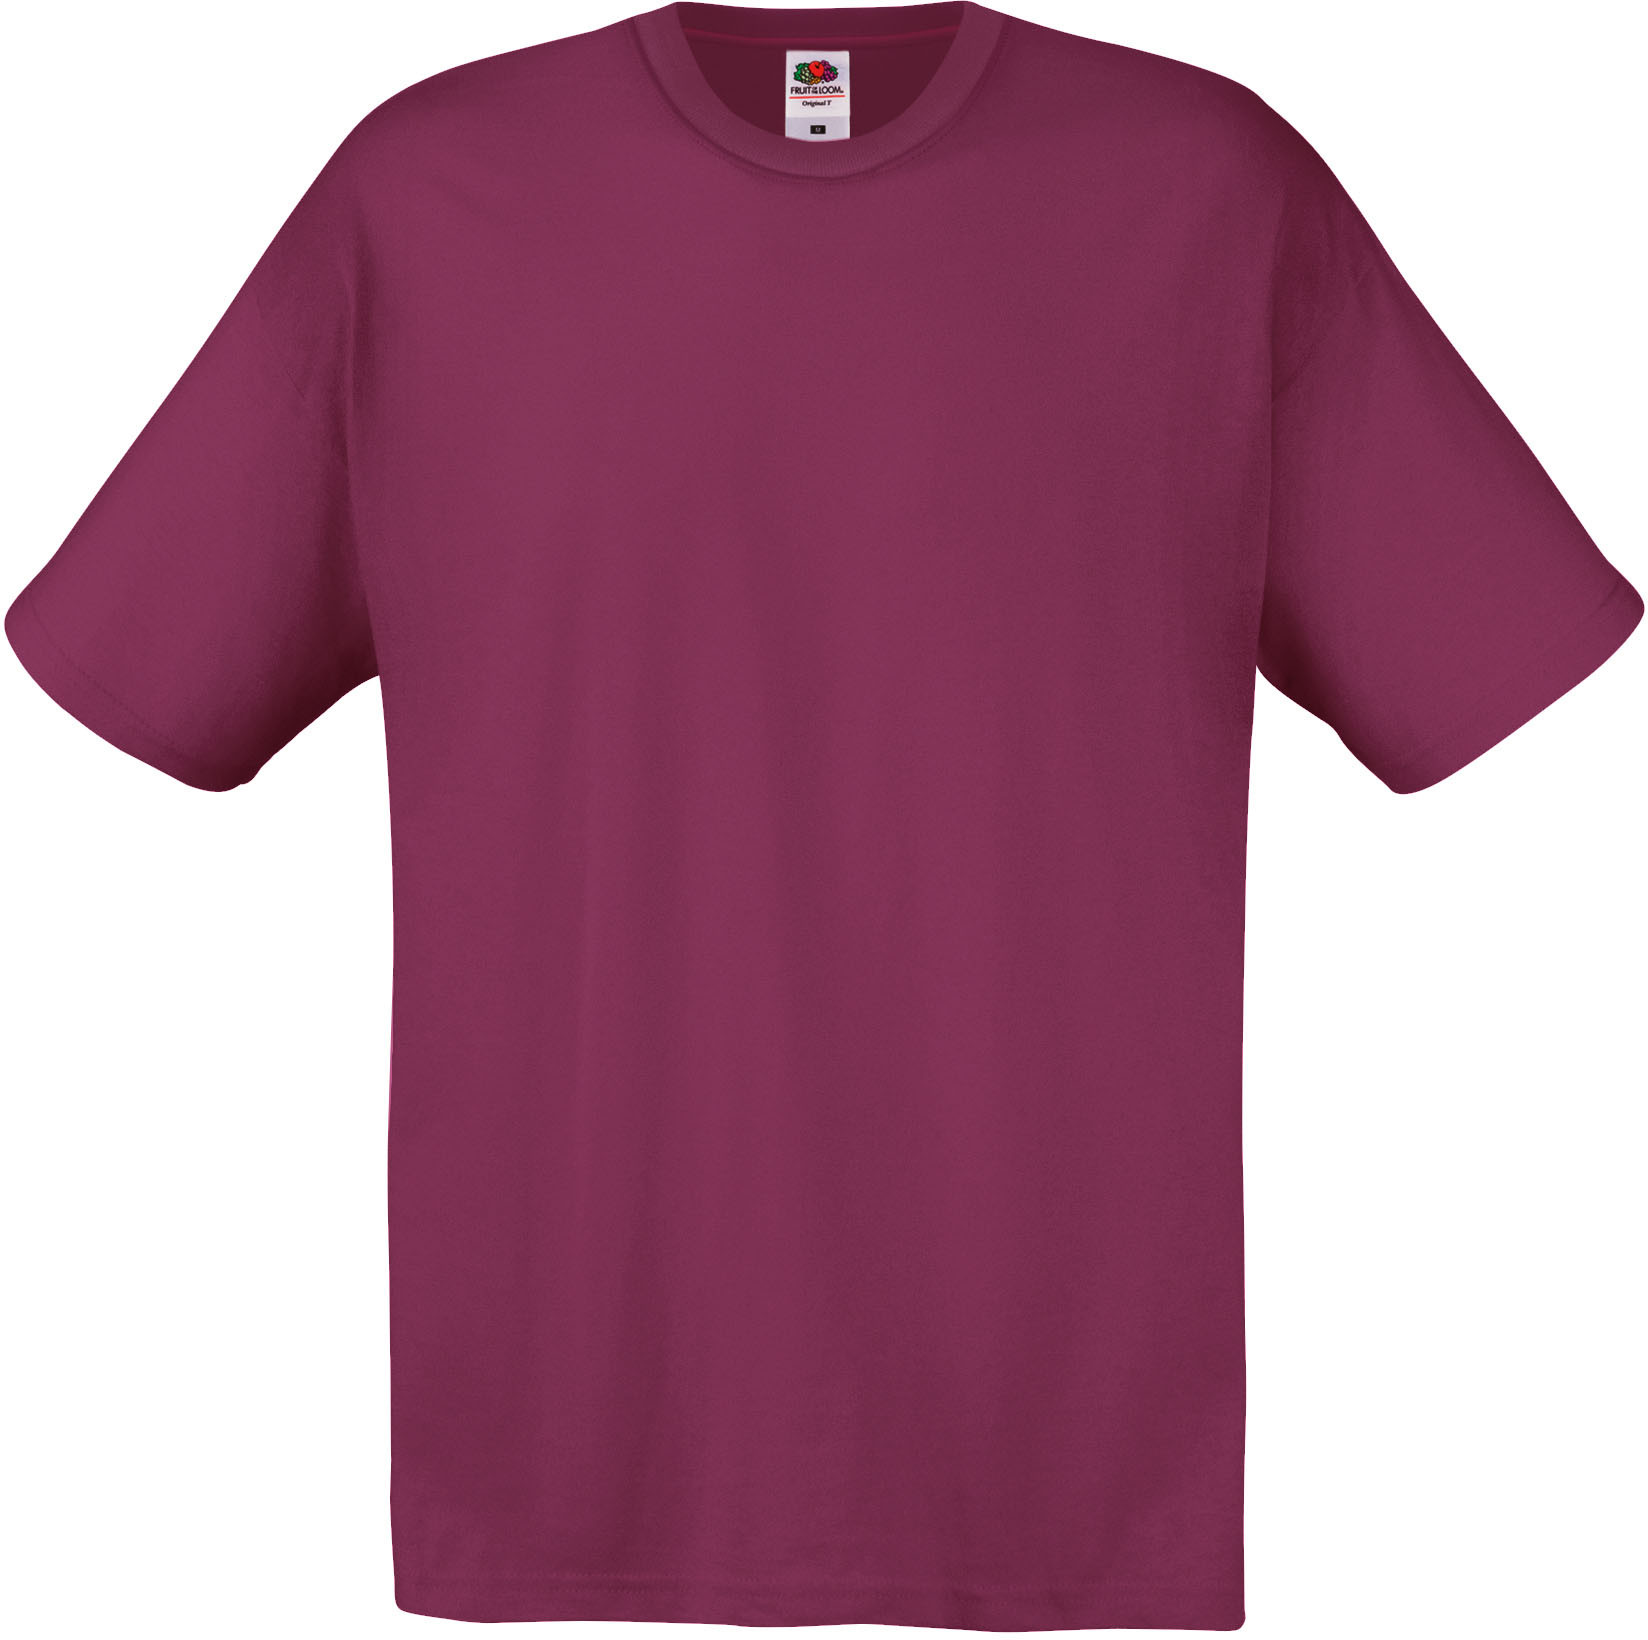 camiseta_personalizada_original_sc6_burgundy